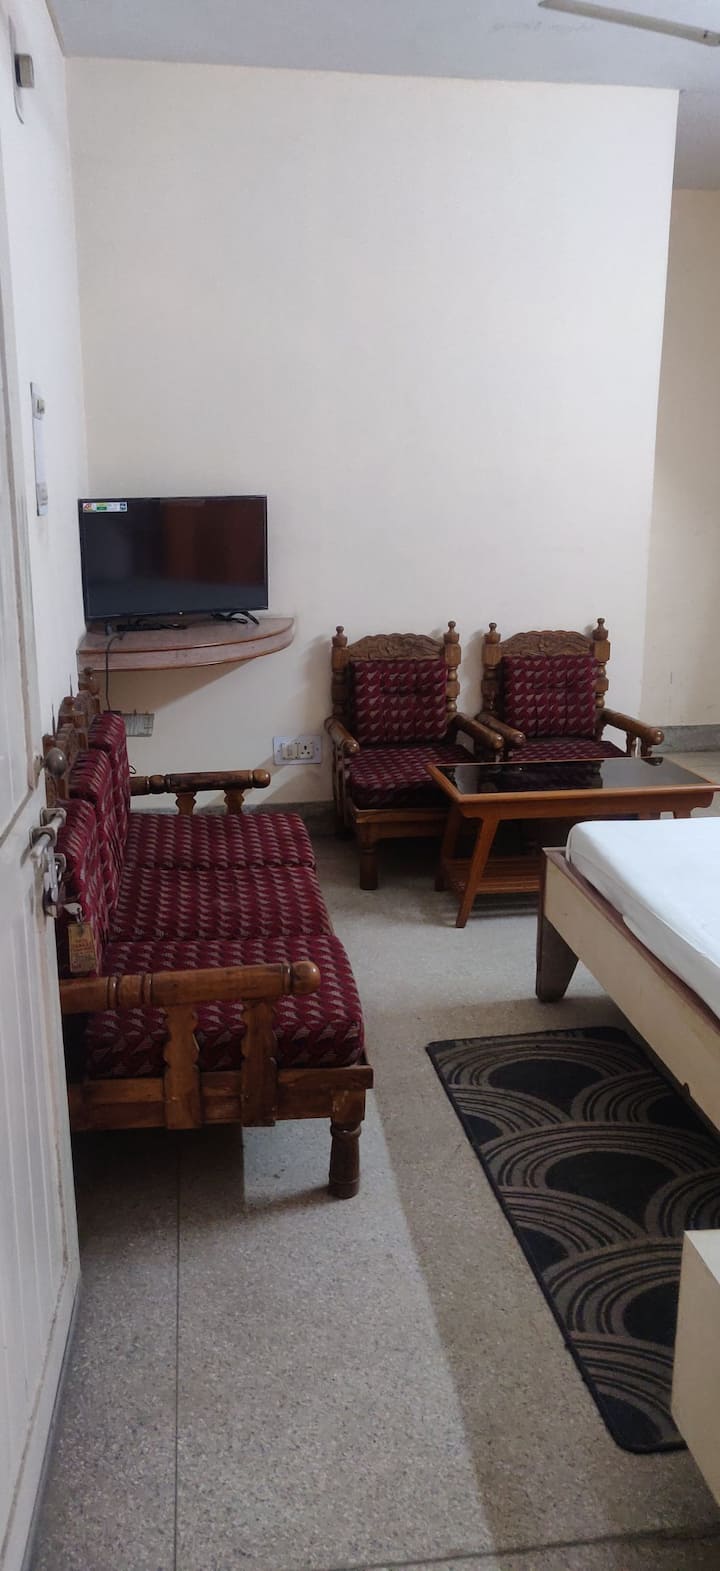 Homely Stay In A Hotel Room Near Railway Station - Gaya